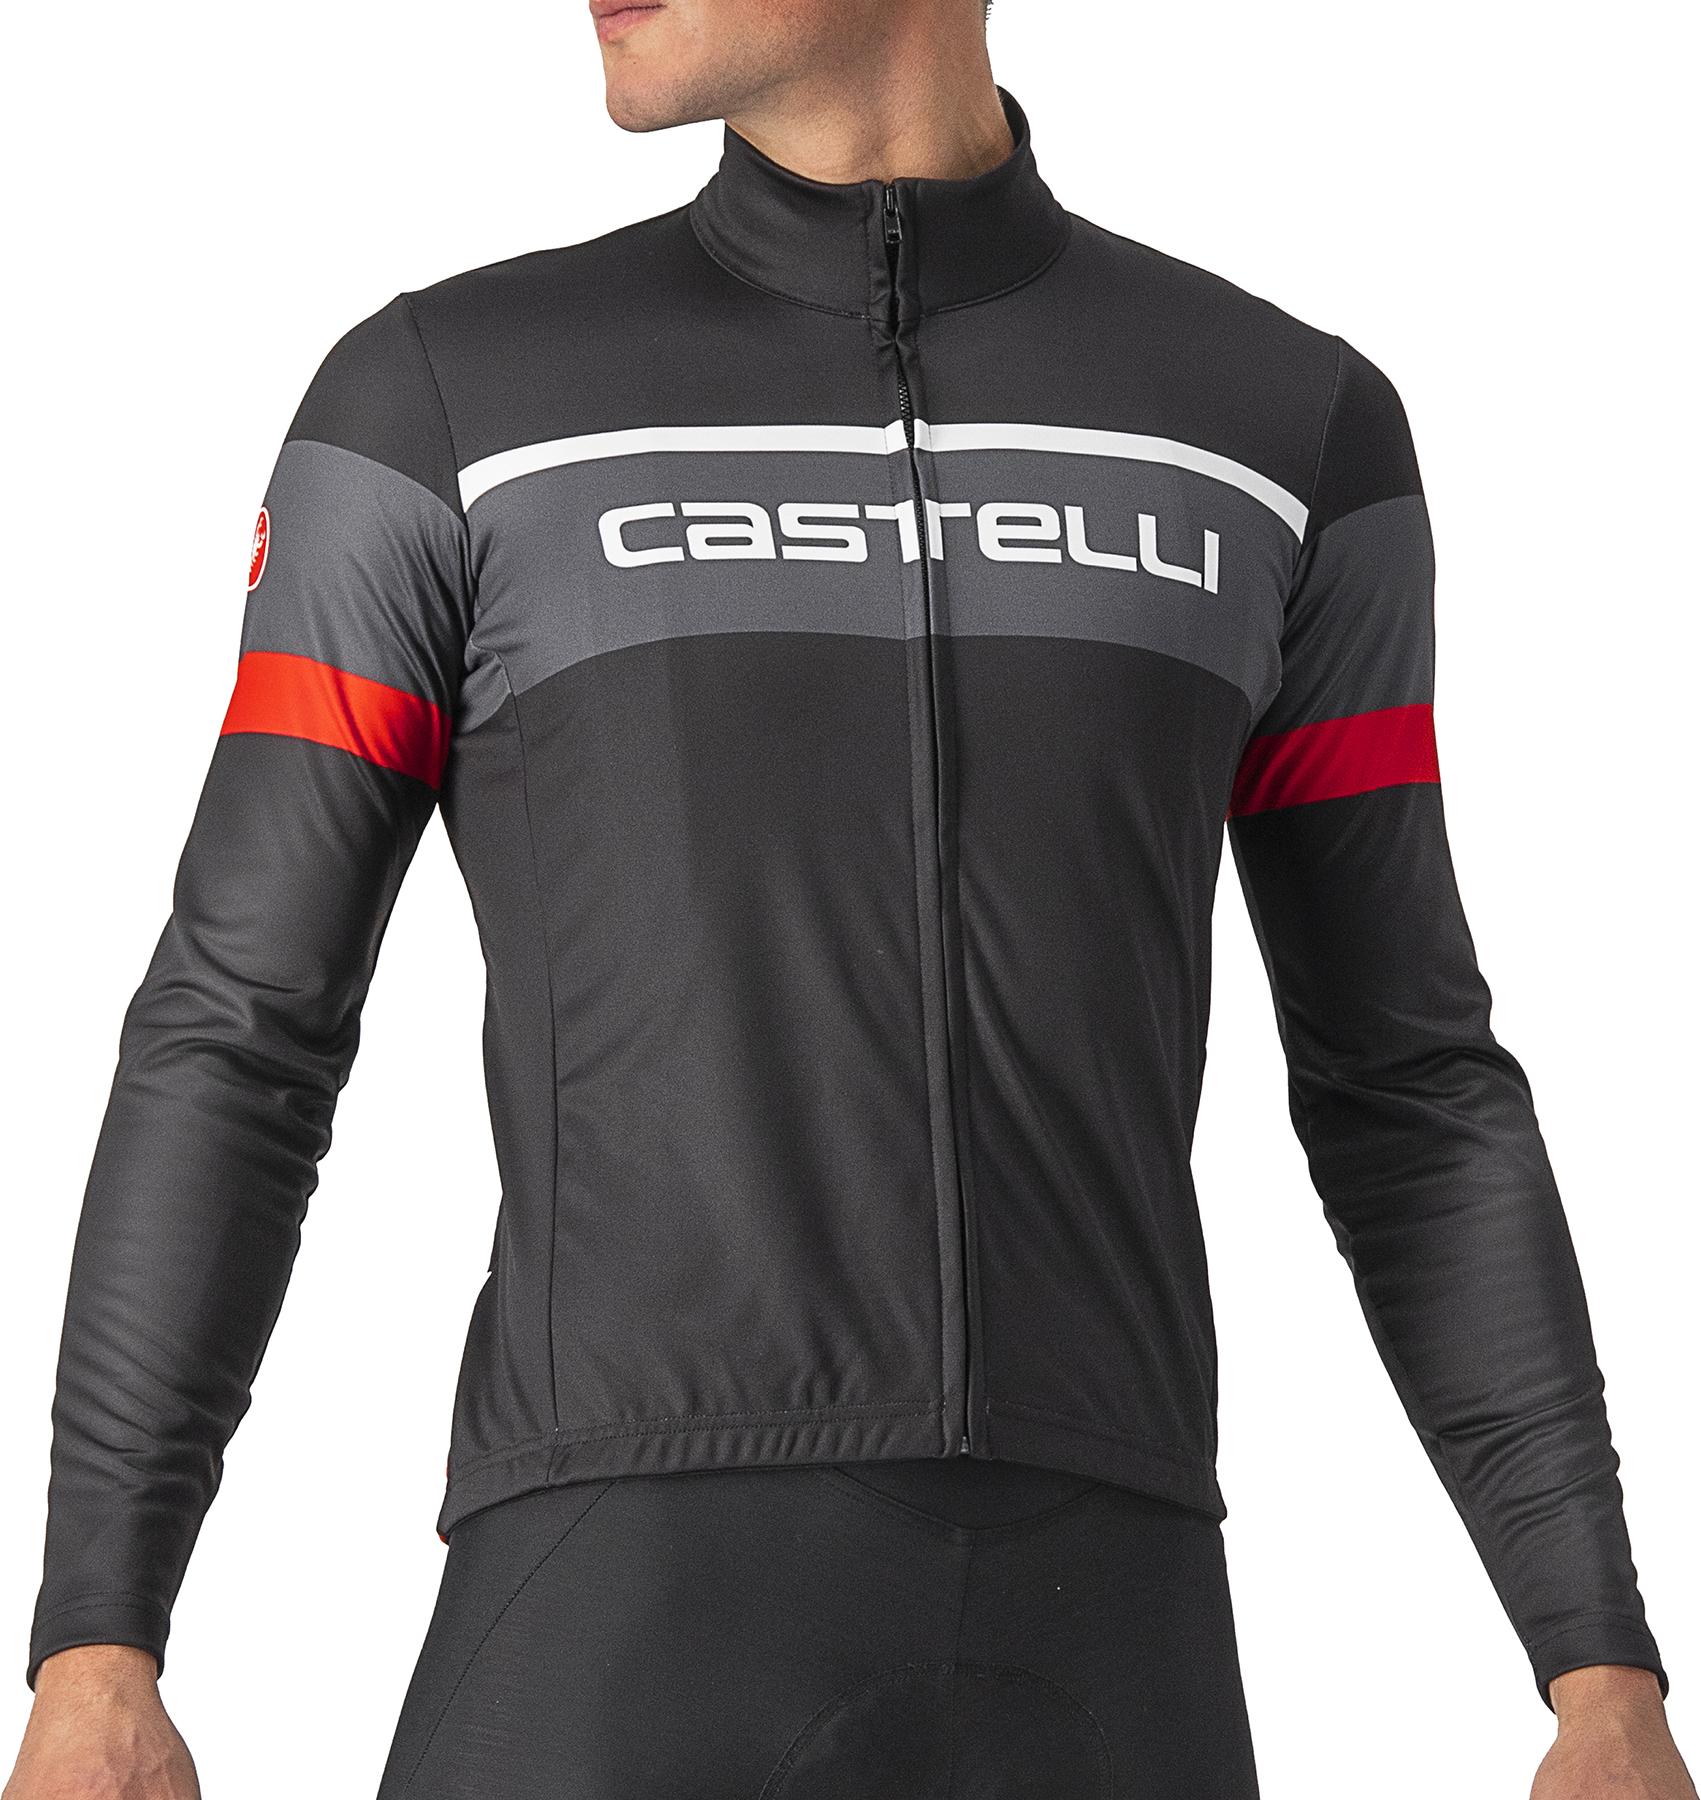 Castelli Passista Long Sleeve Jersey - Light Black/dark Grey/red